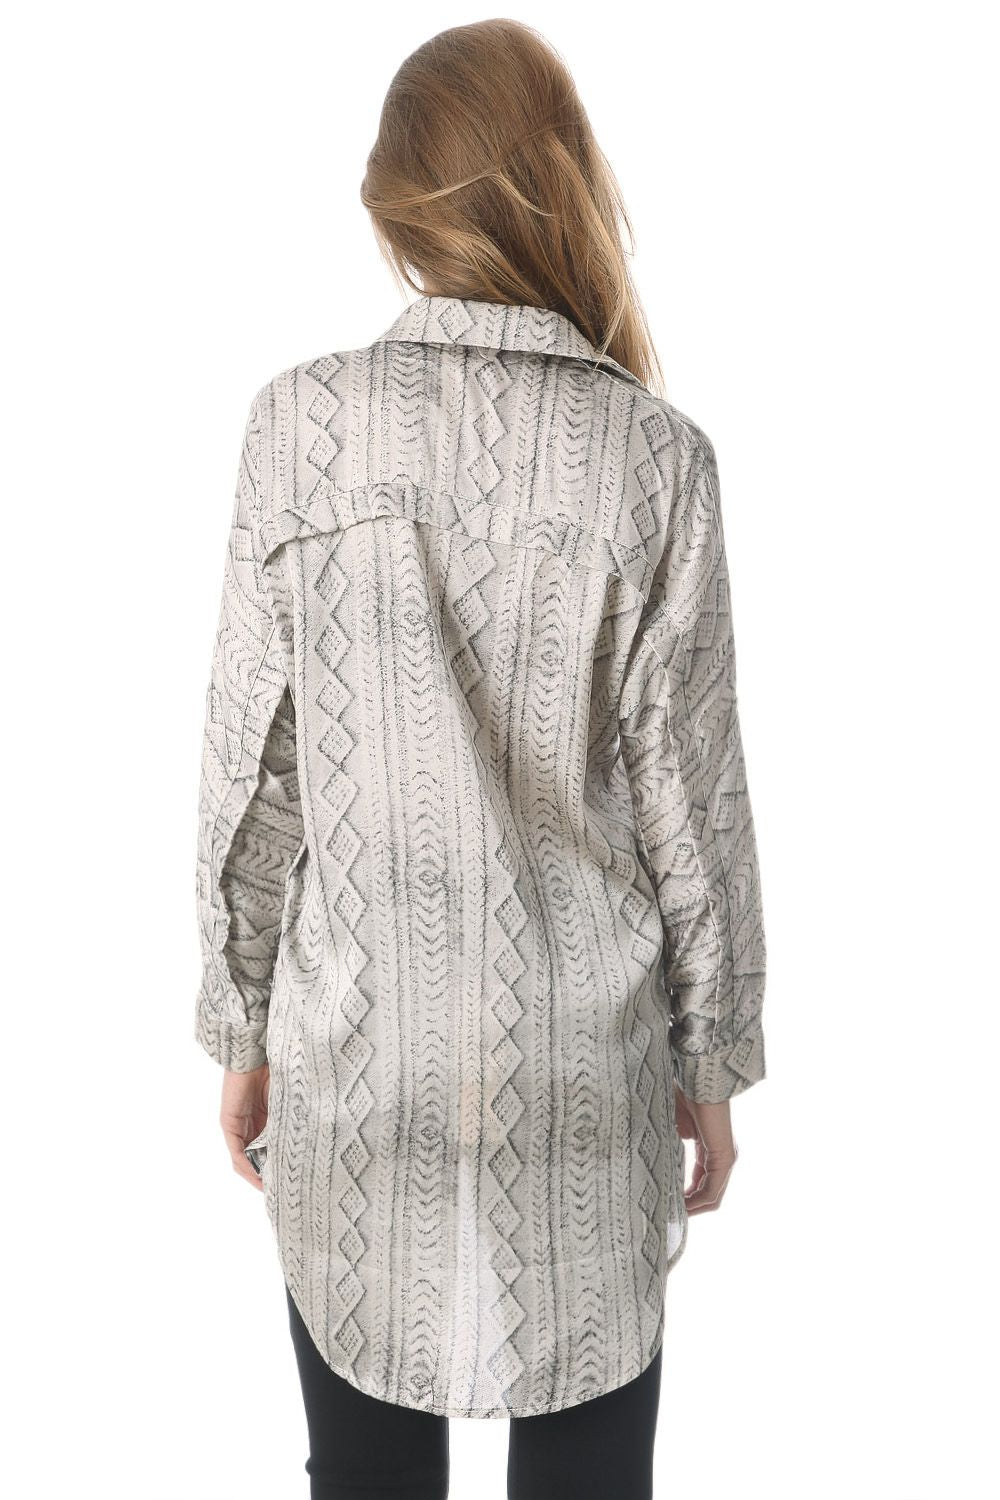 Satin longline shirt in grey abstract print Szua Store